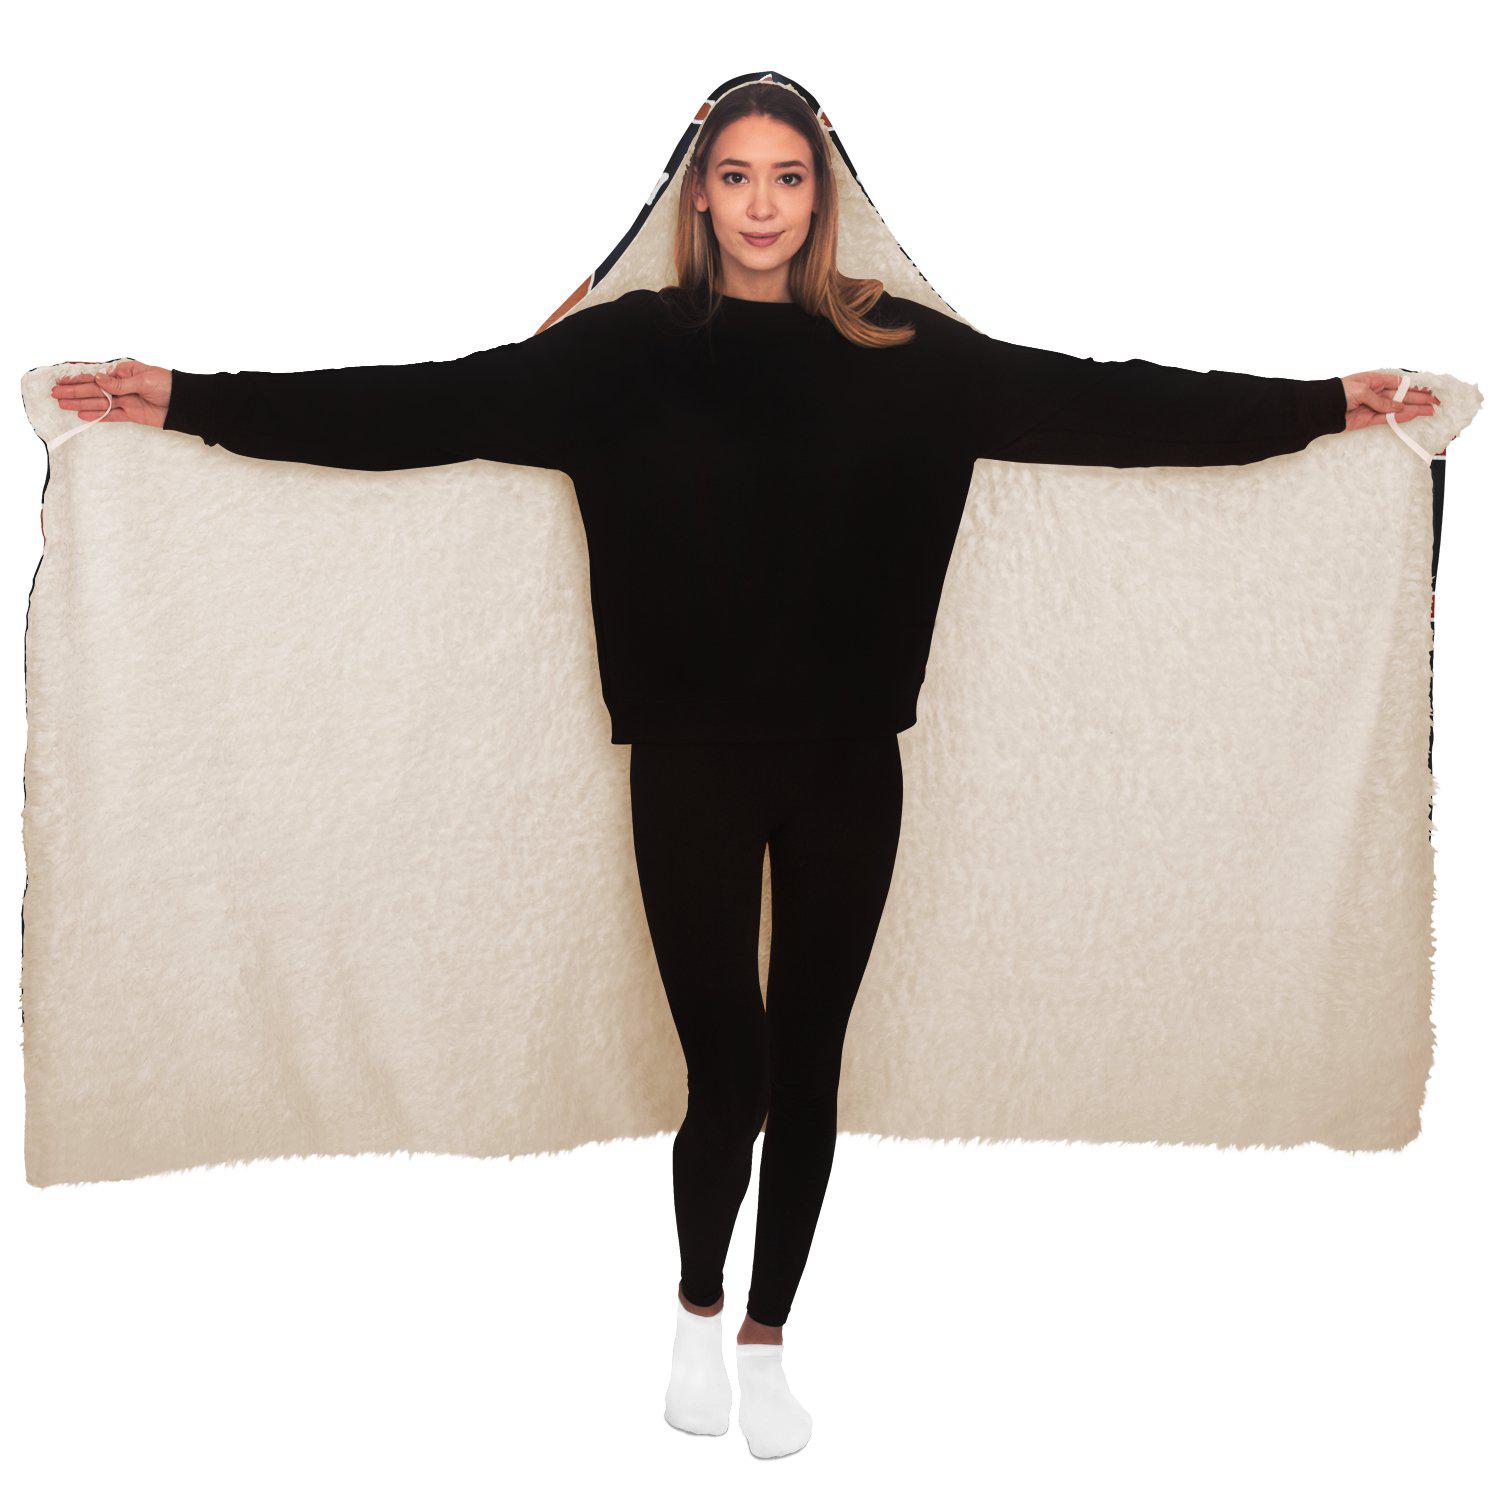 Hooded Blanket - AOP Contemporary Design Hooded Blanket